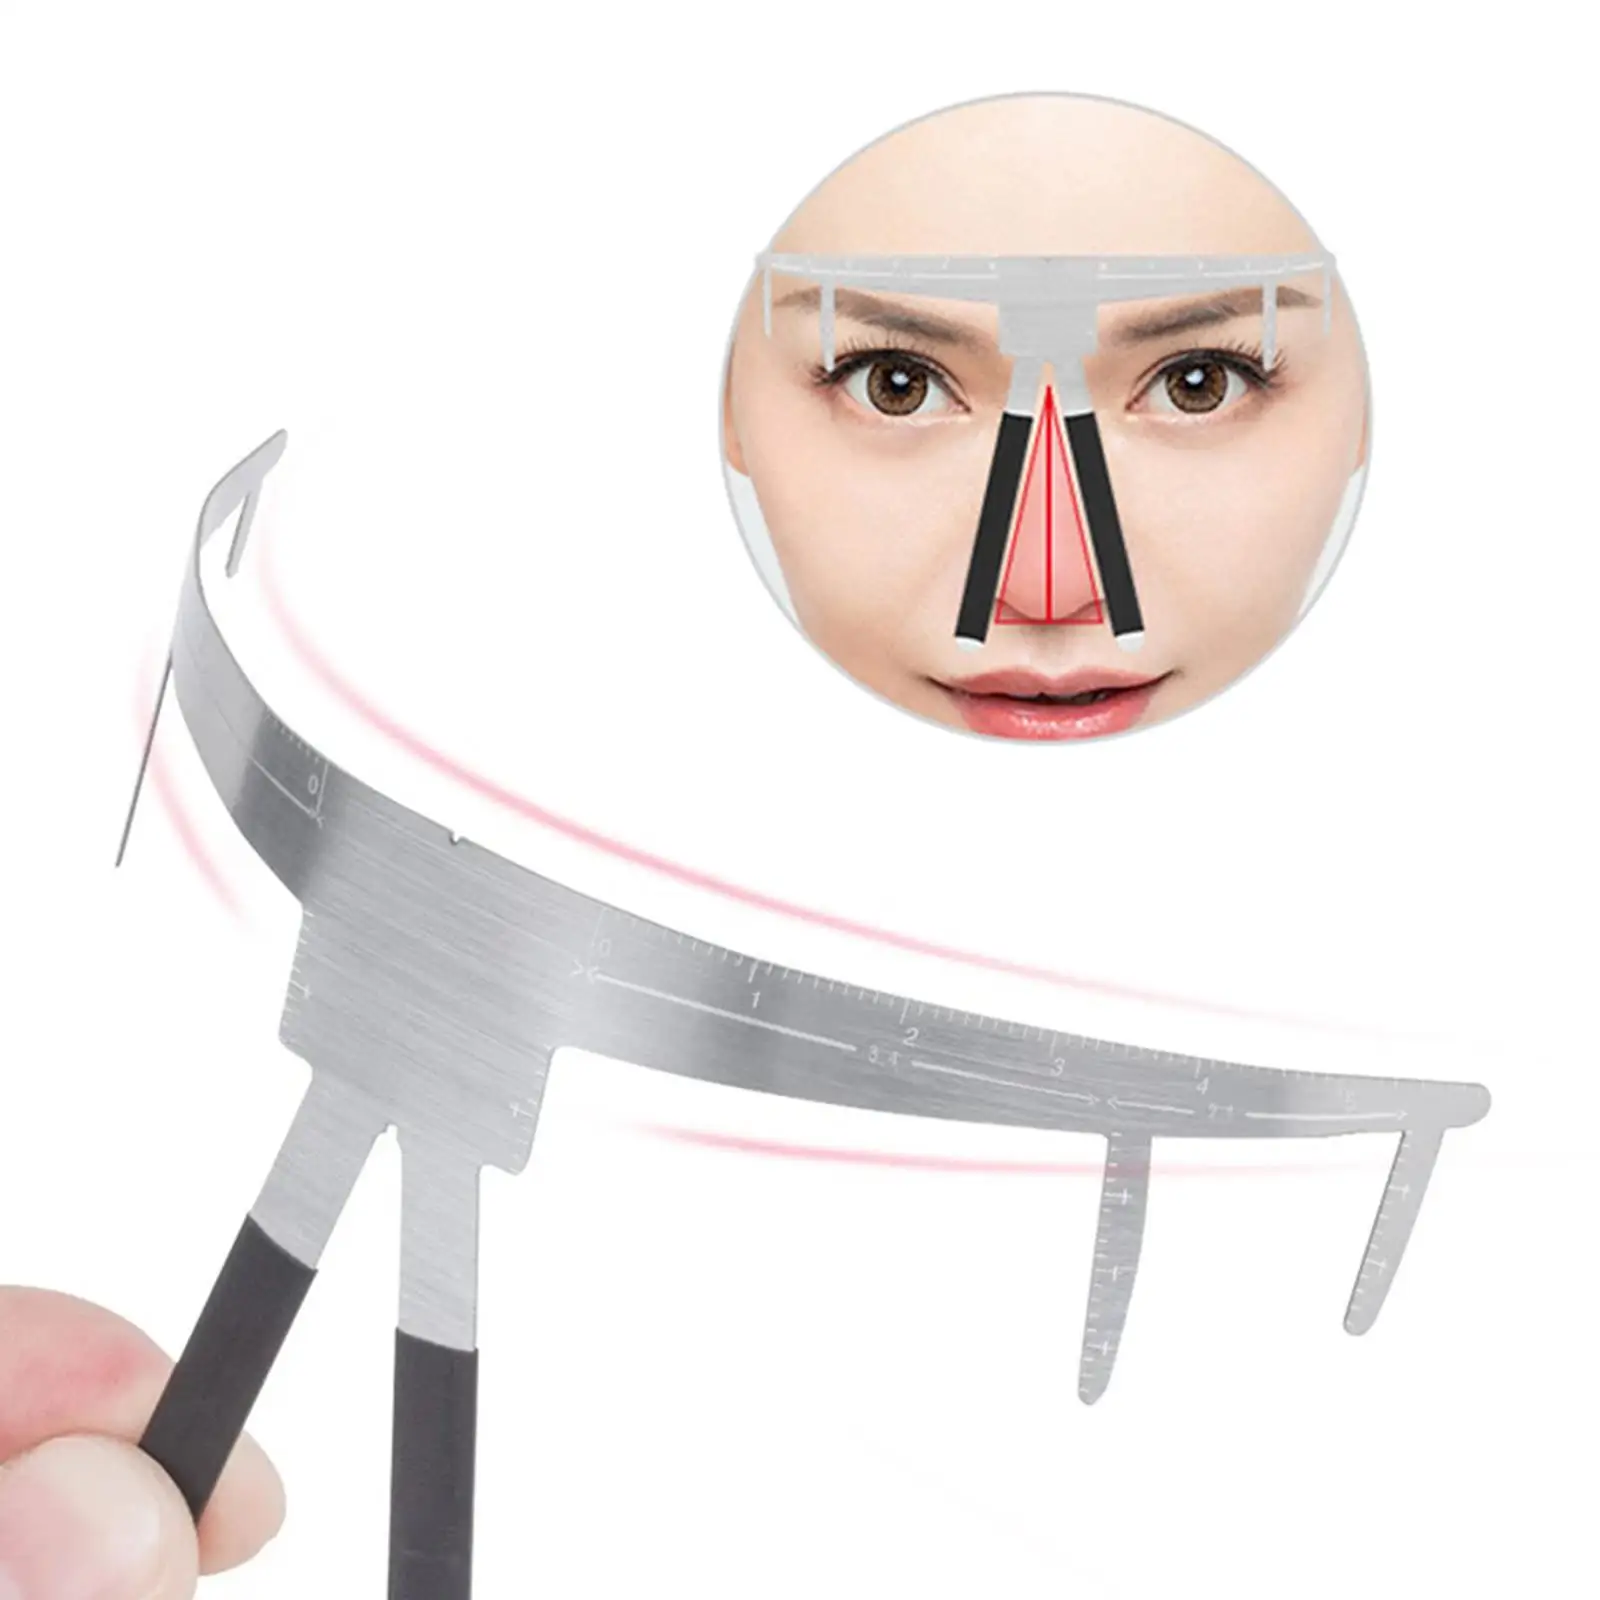  Eyebrow Ruler Symmetrical Tool Permanent Tool for Eyebrow Measuring